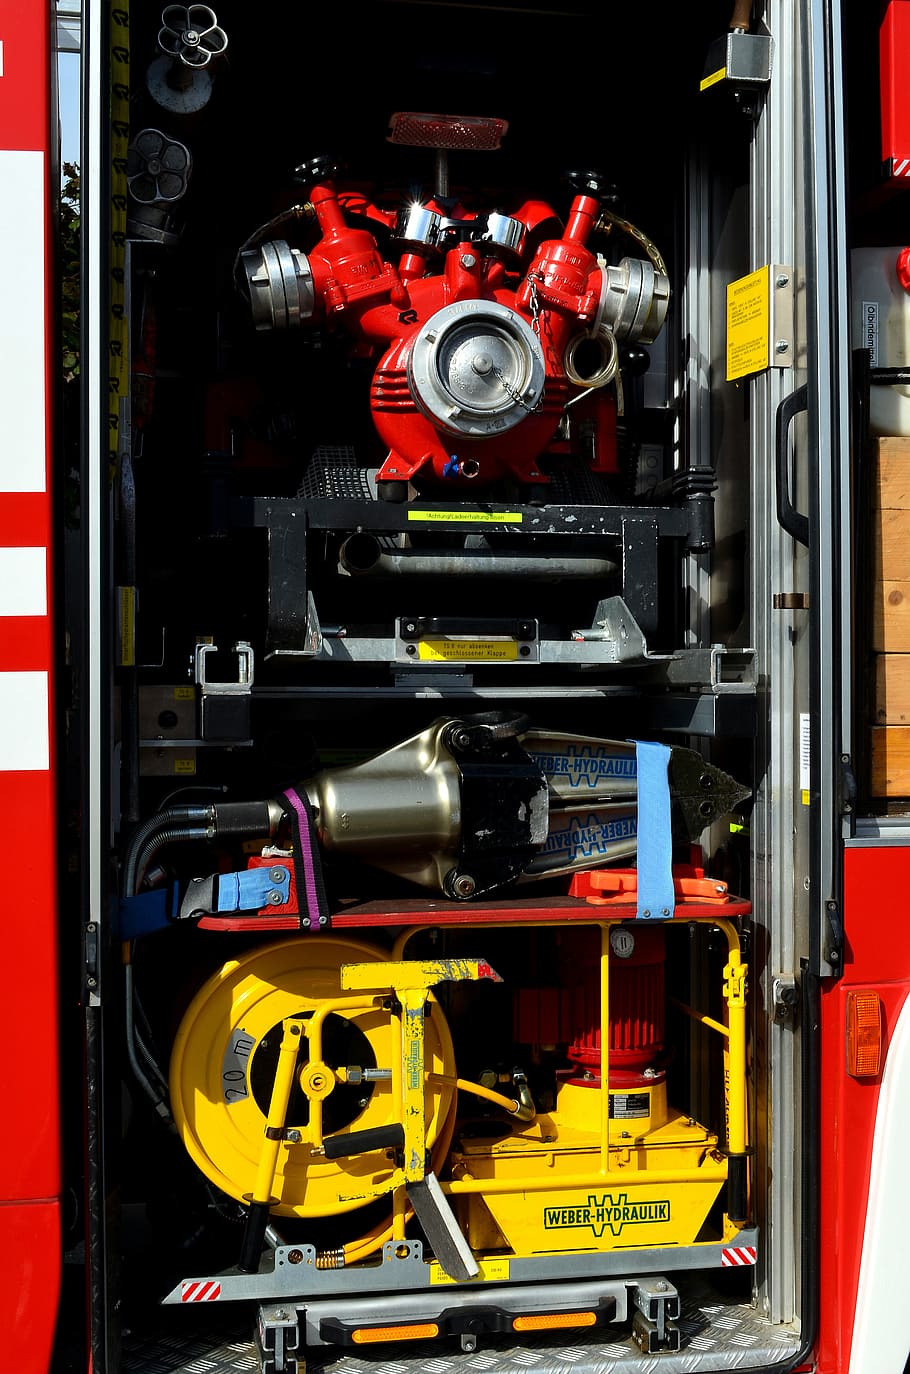 fire, firefighter equipment, equipment fire truck, fire truck, equipment, fire department connections, fire brigade hydraulic spreader, vehicles, tools, hydraulic pump